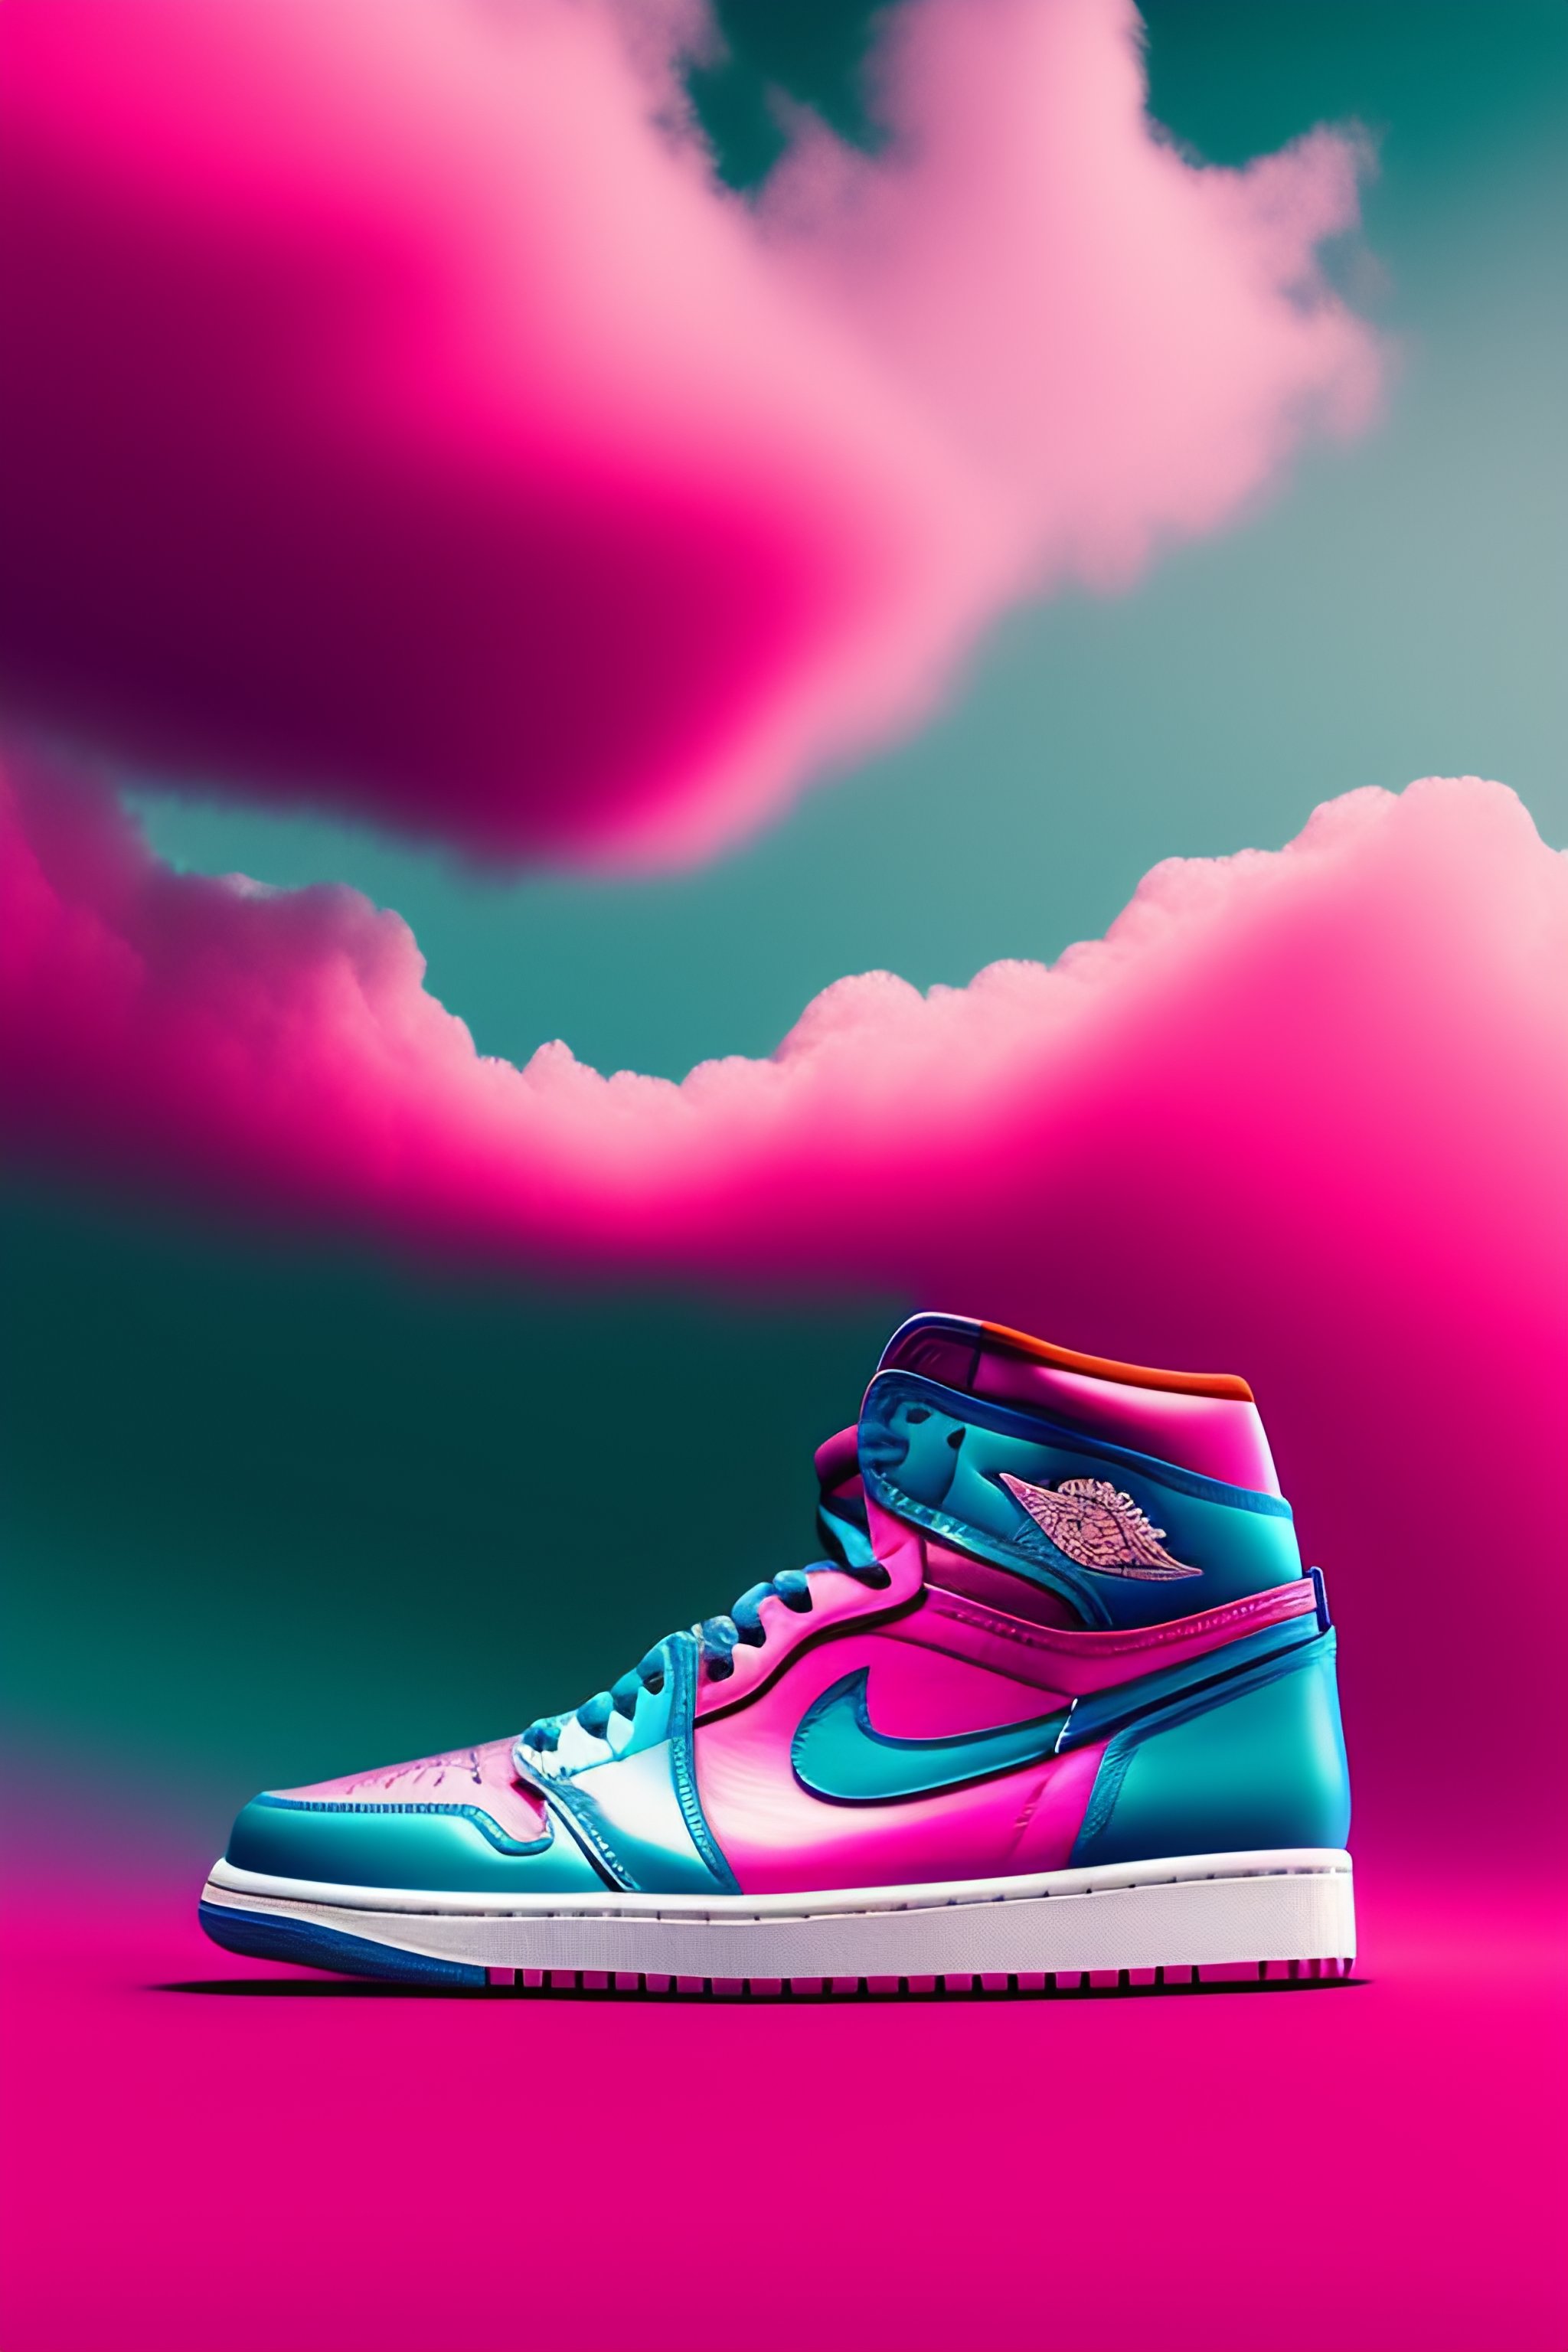 Nike jordan 1 chicago colorway, pink